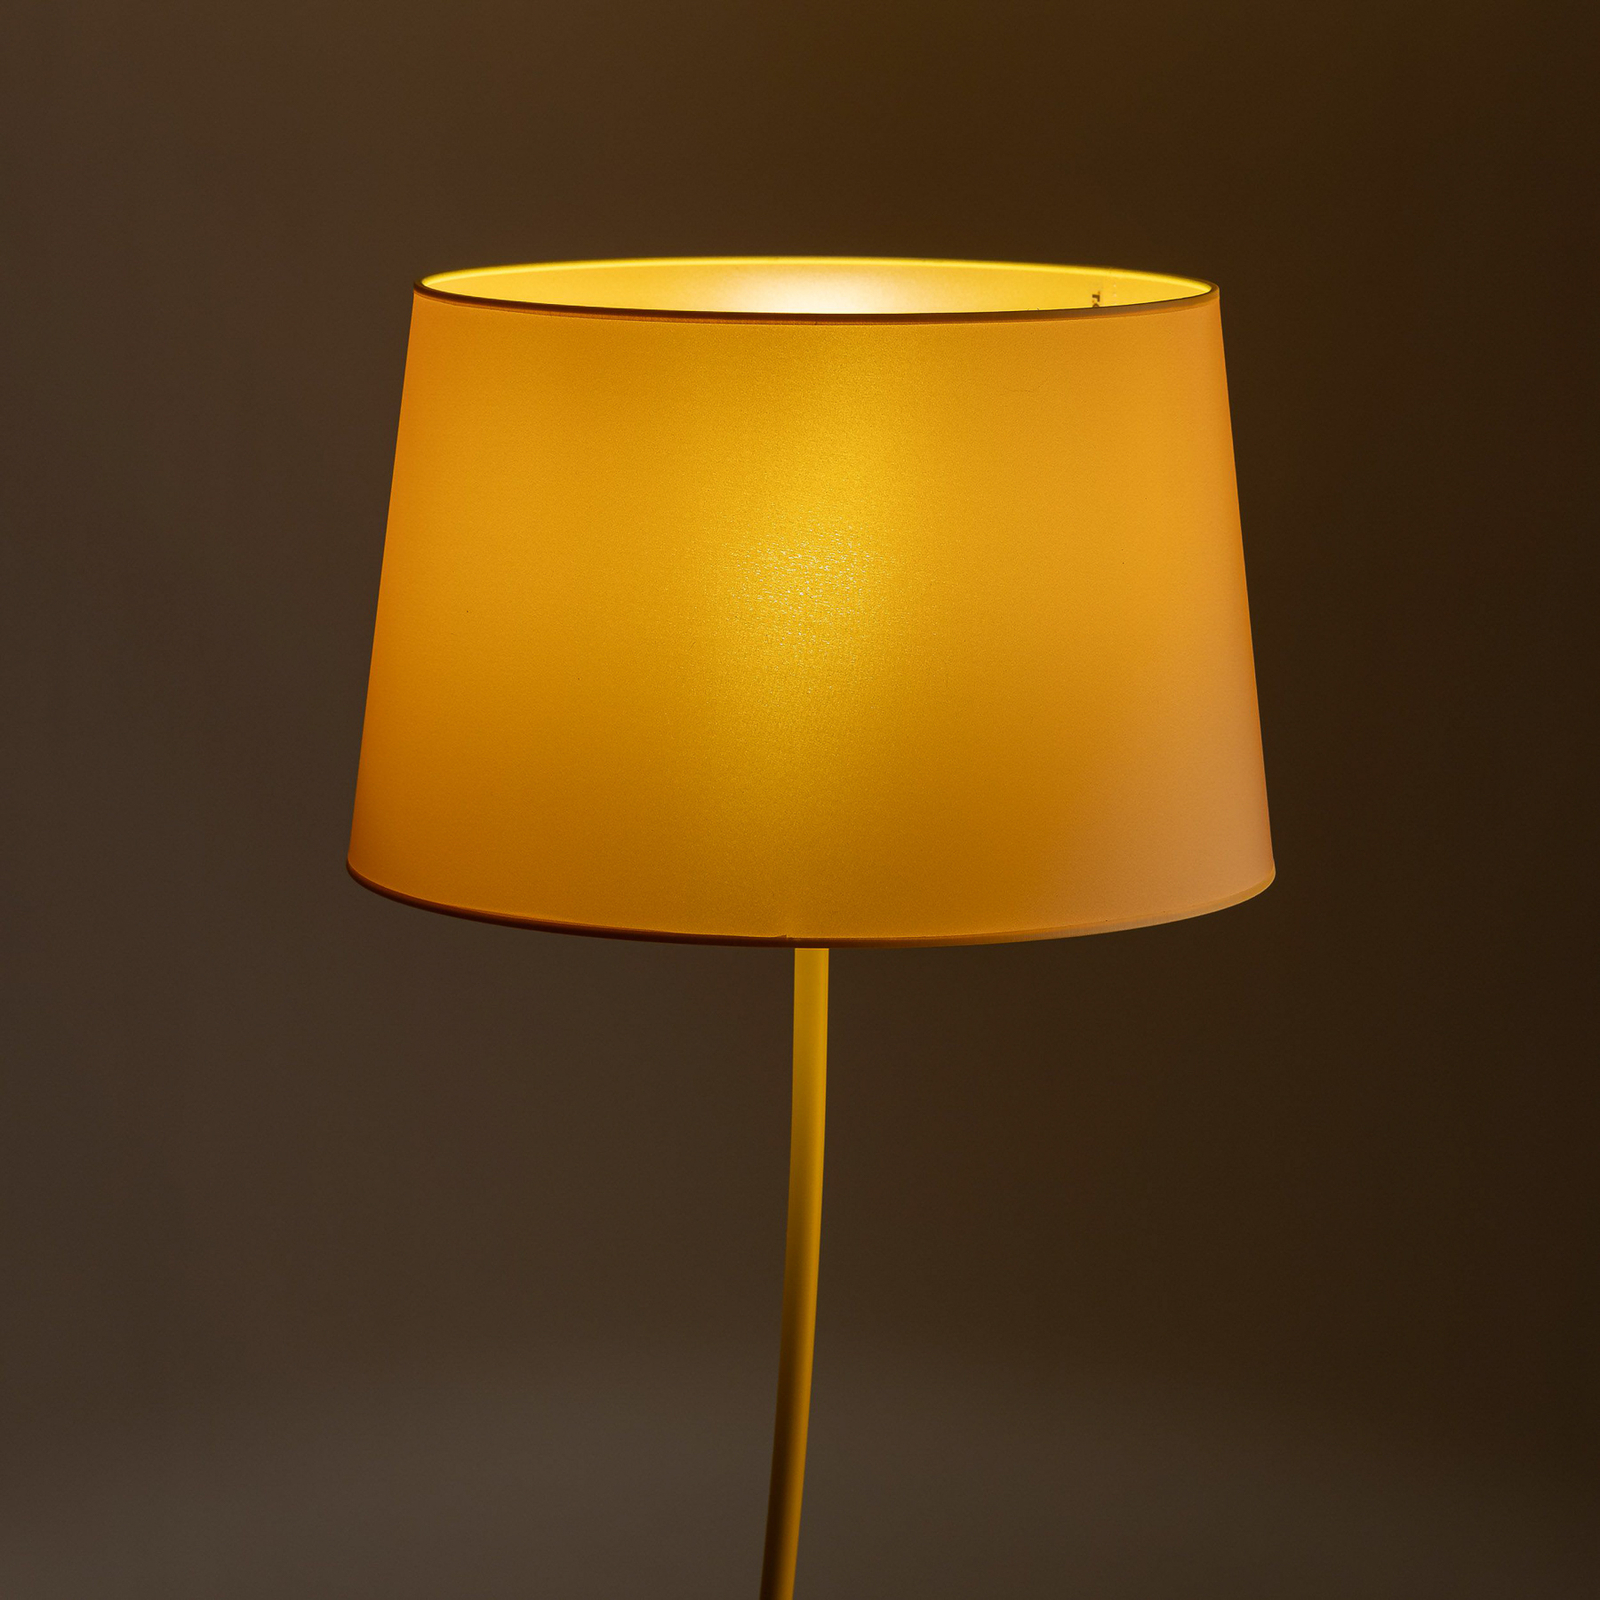 Nicola floor lamp, yellow